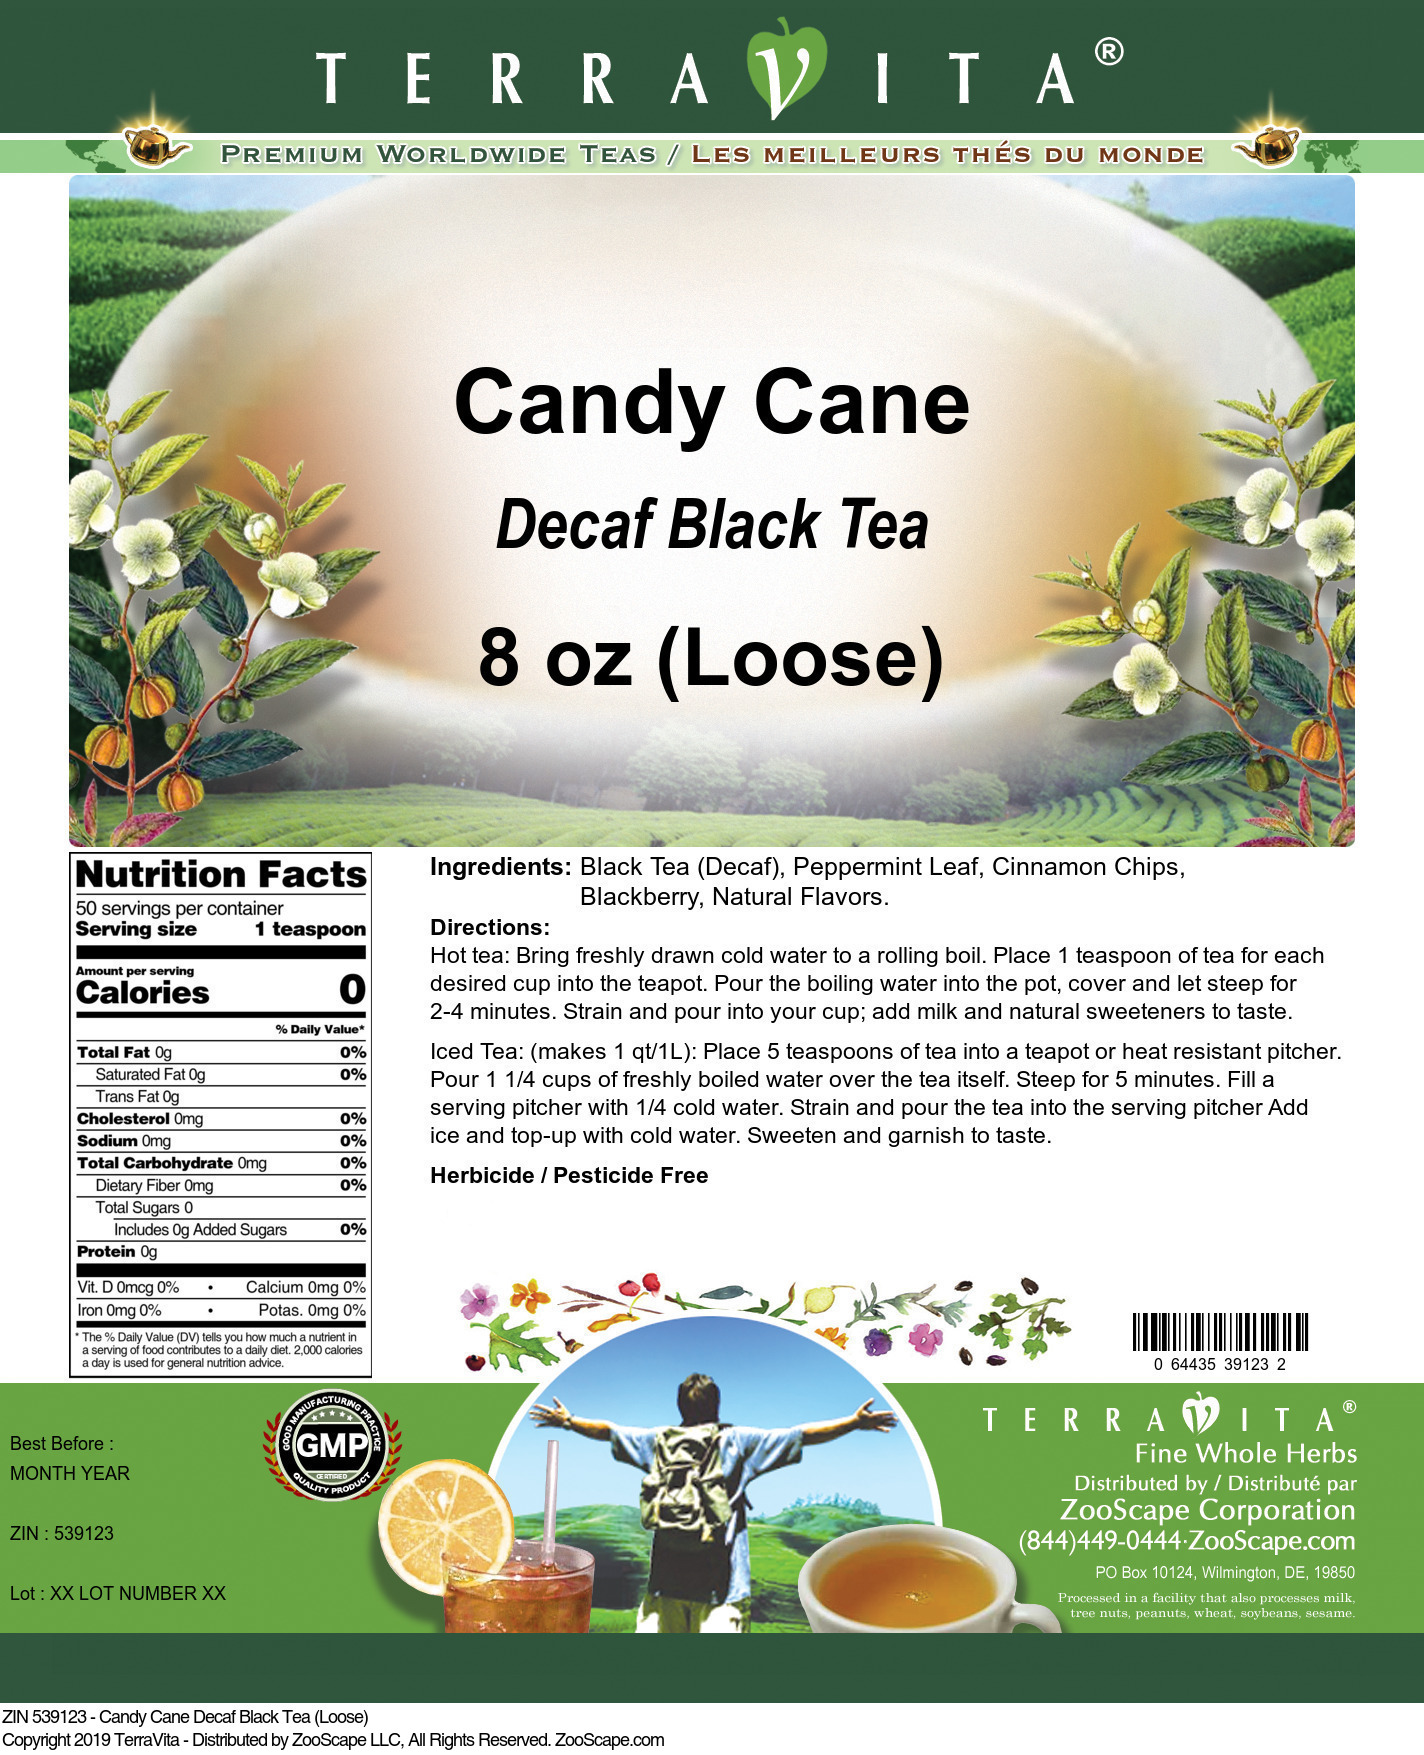 Candy Cane Decaf Black Tea (Loose) - Label